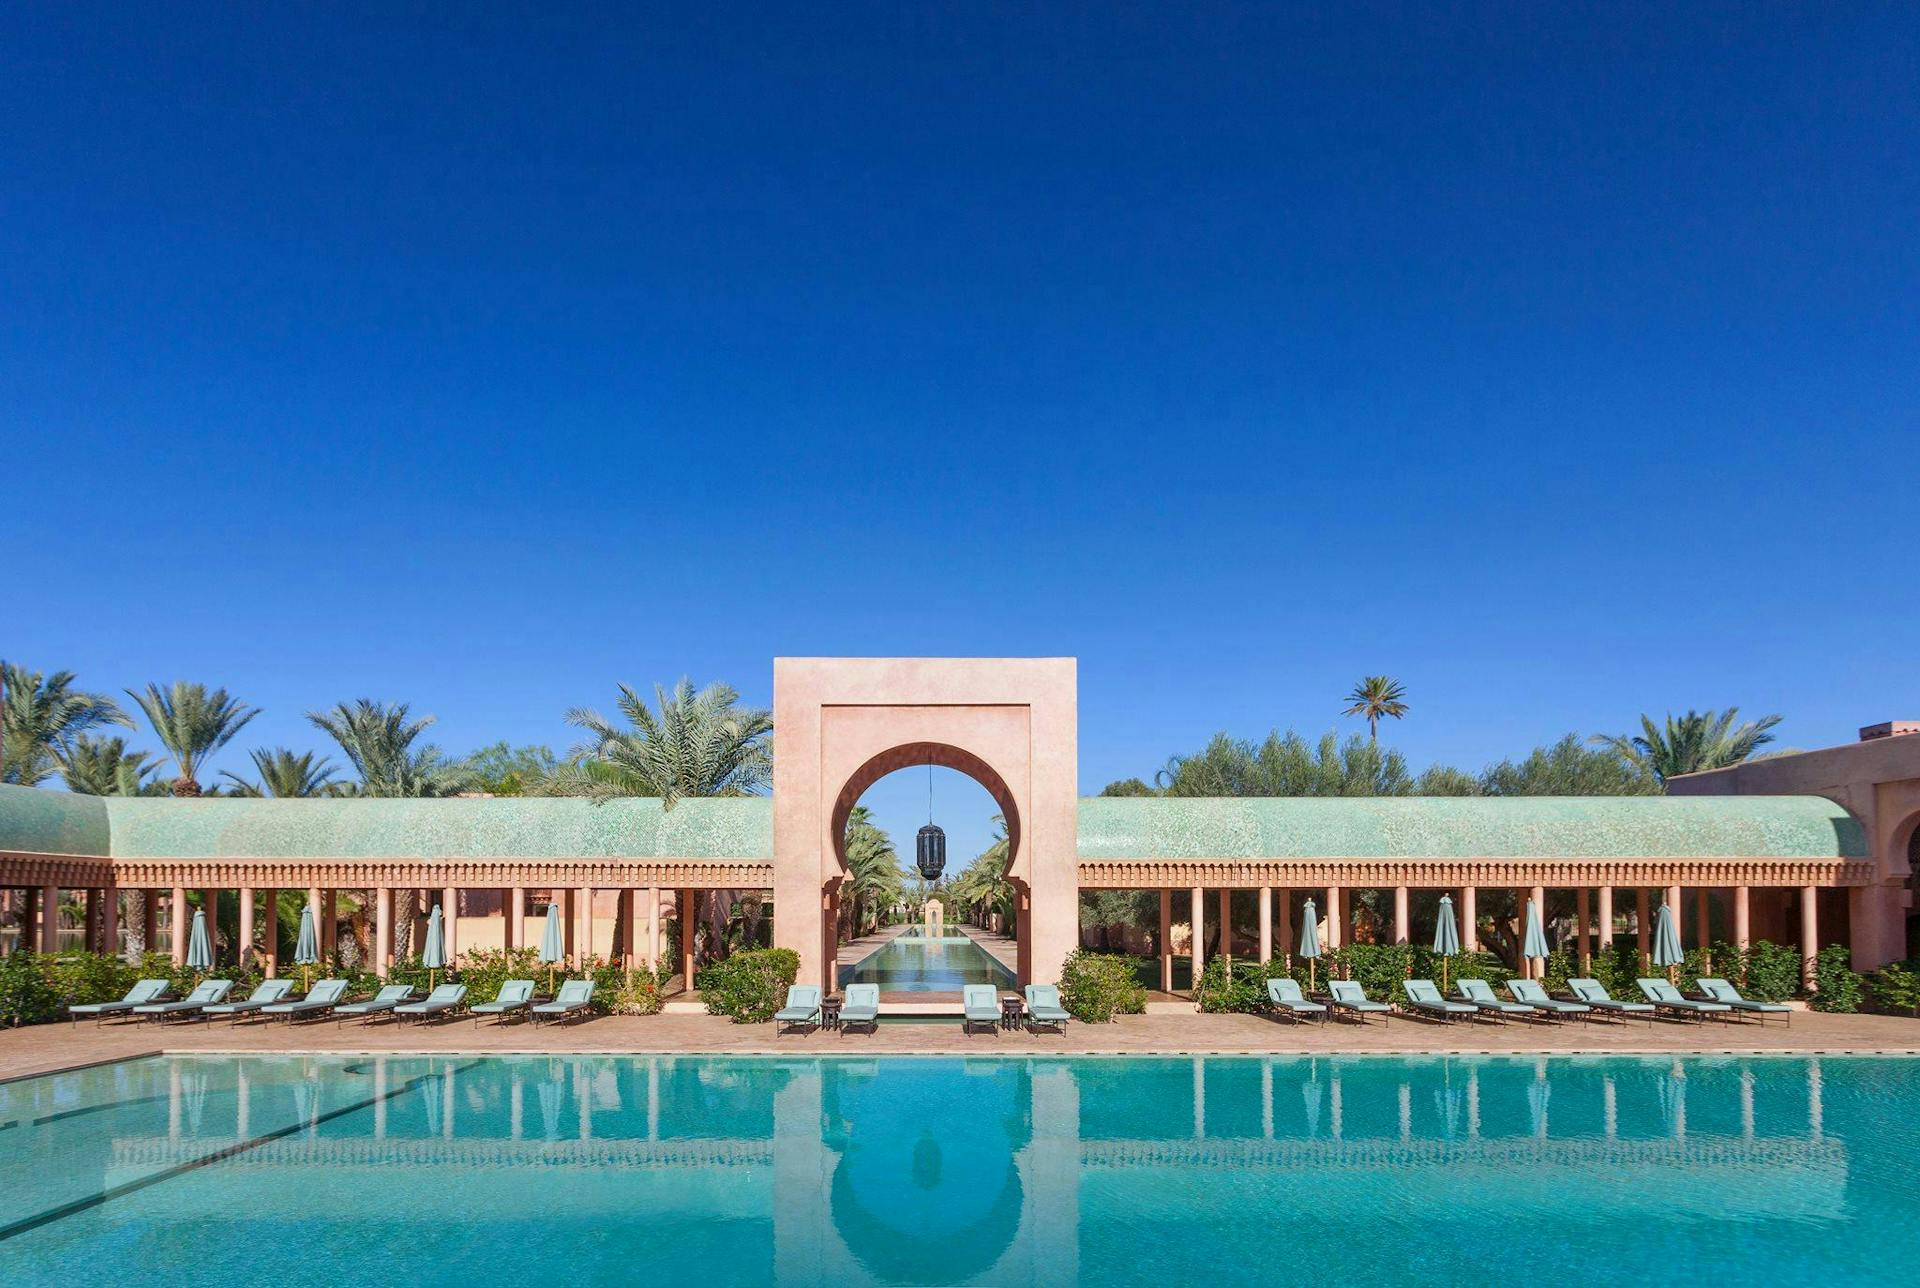 A serene swimming pool at a Moroccan resort. 